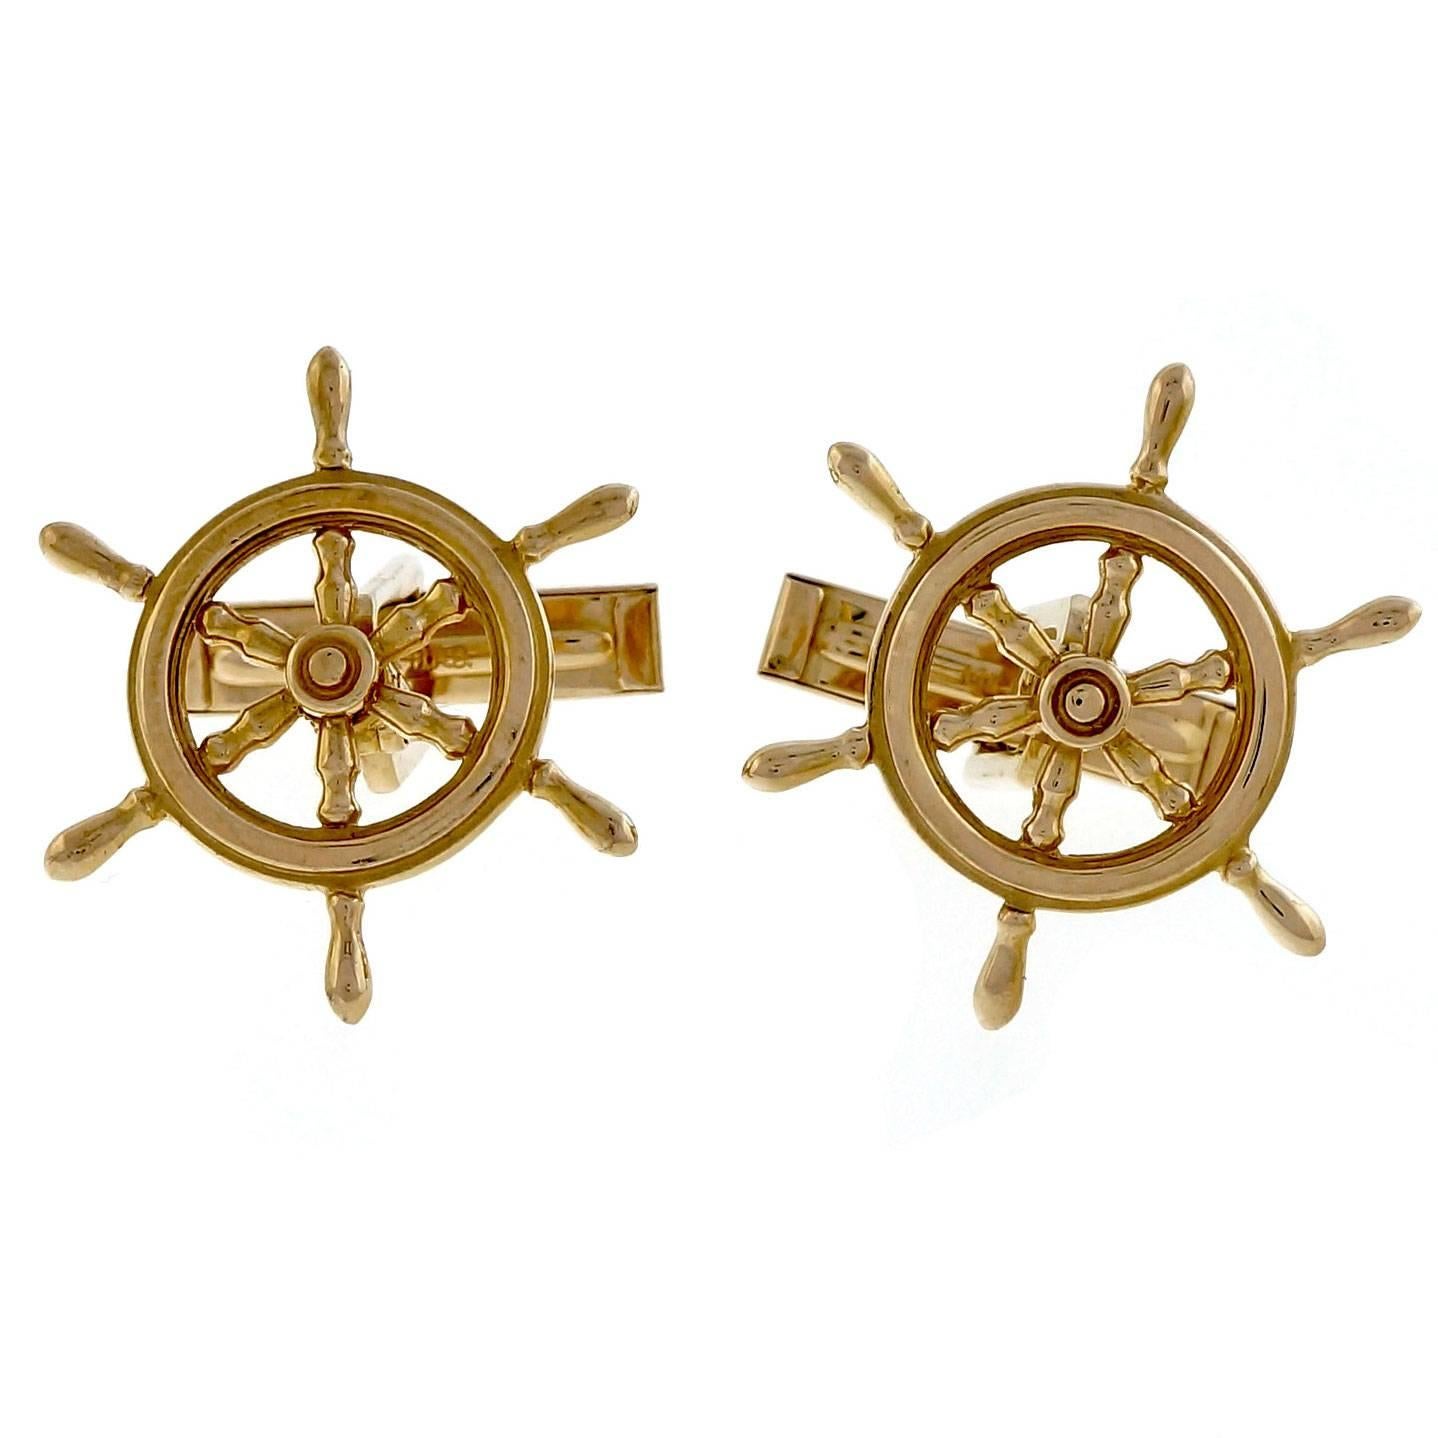  1960s B.A. Ballou Ship's Wheel Gold Cufflinks